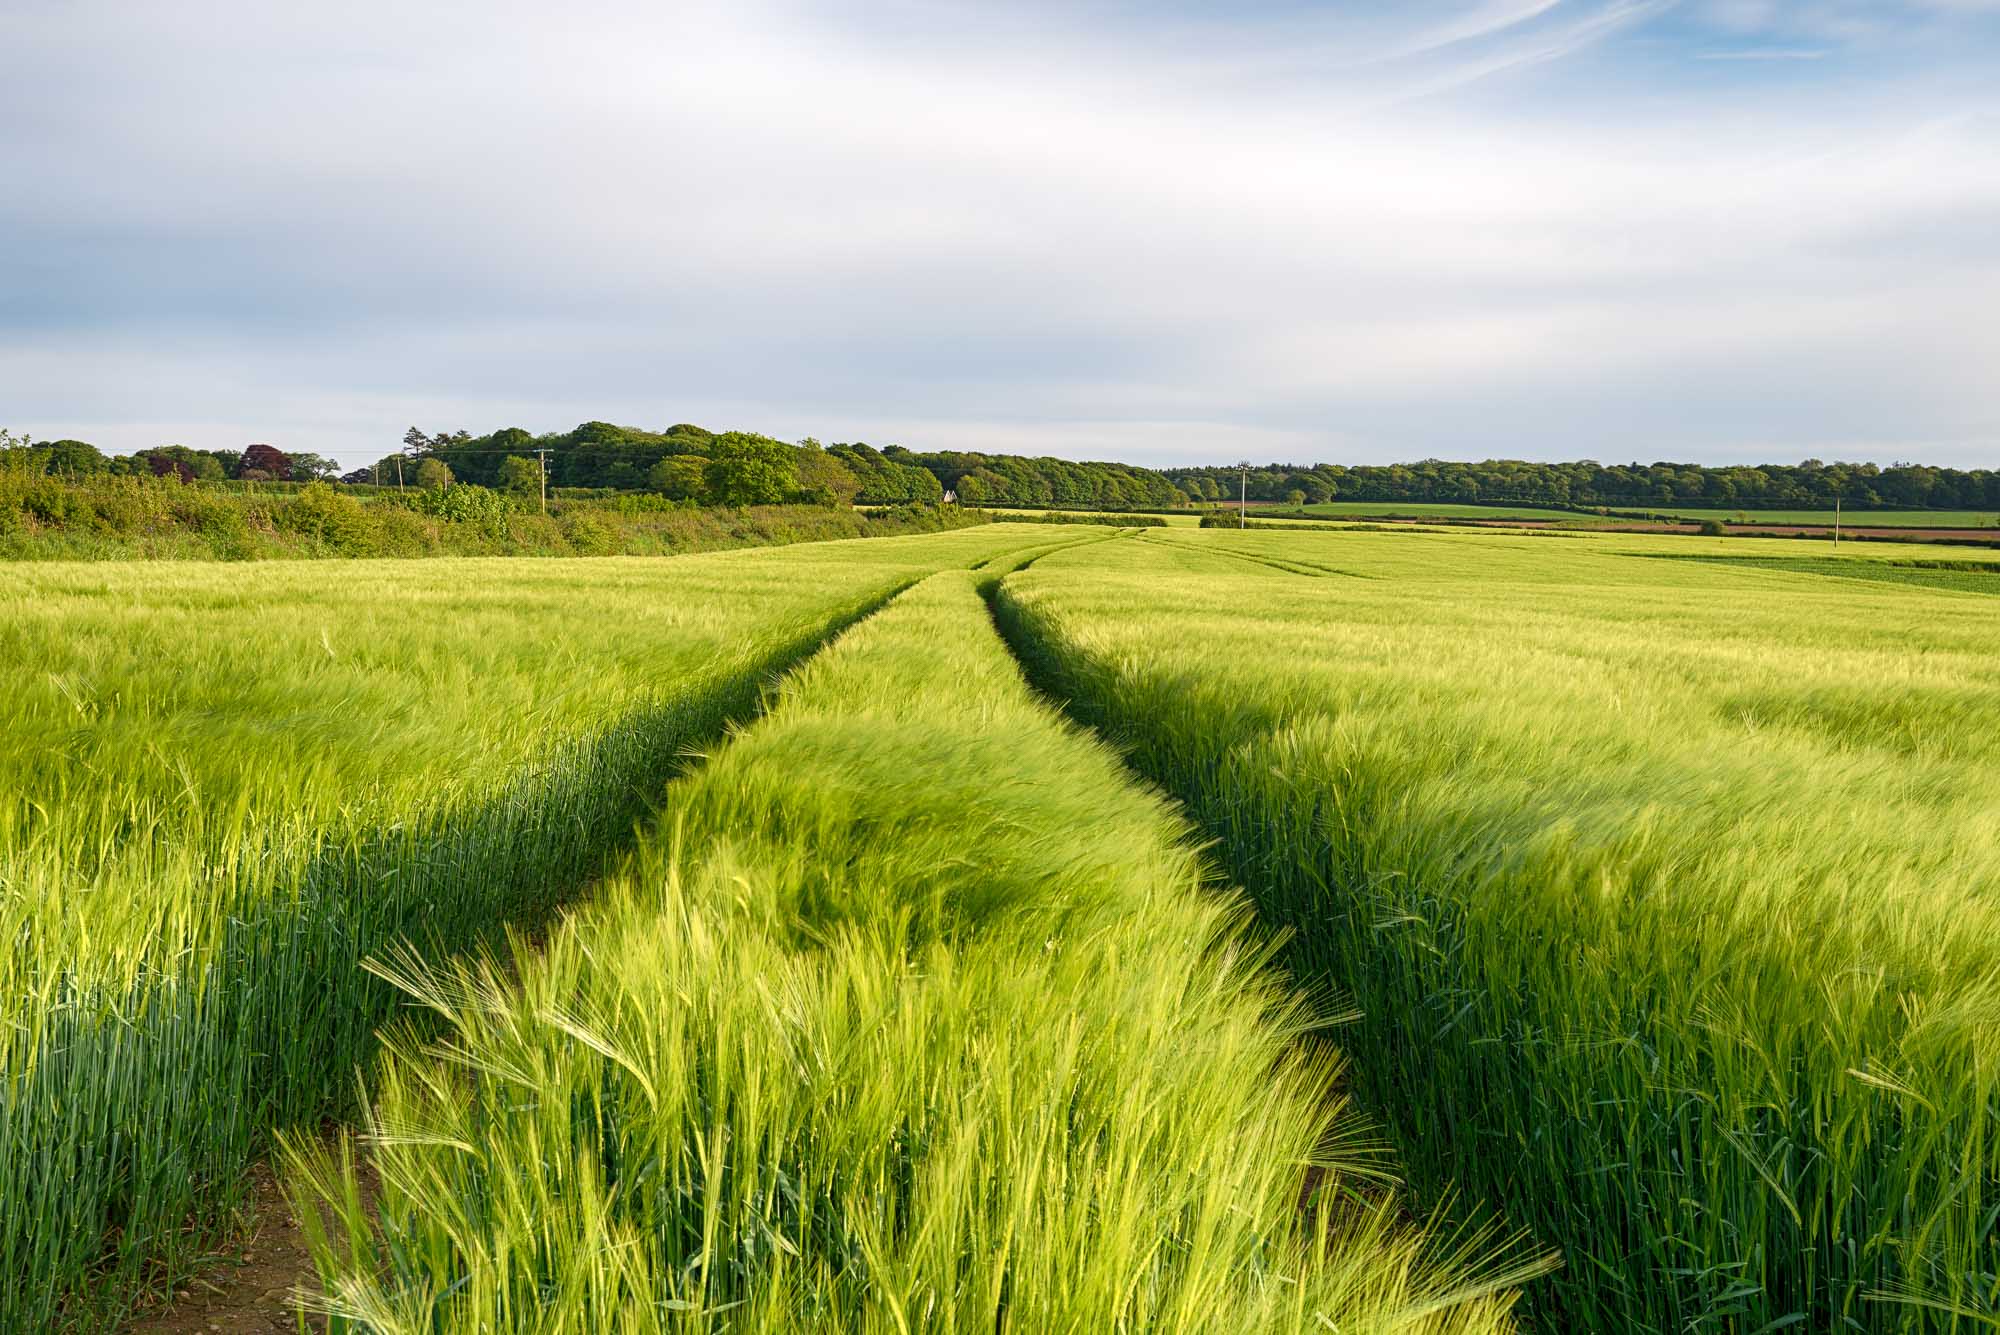 A barley filed in the Cornish countryside near Bodmin